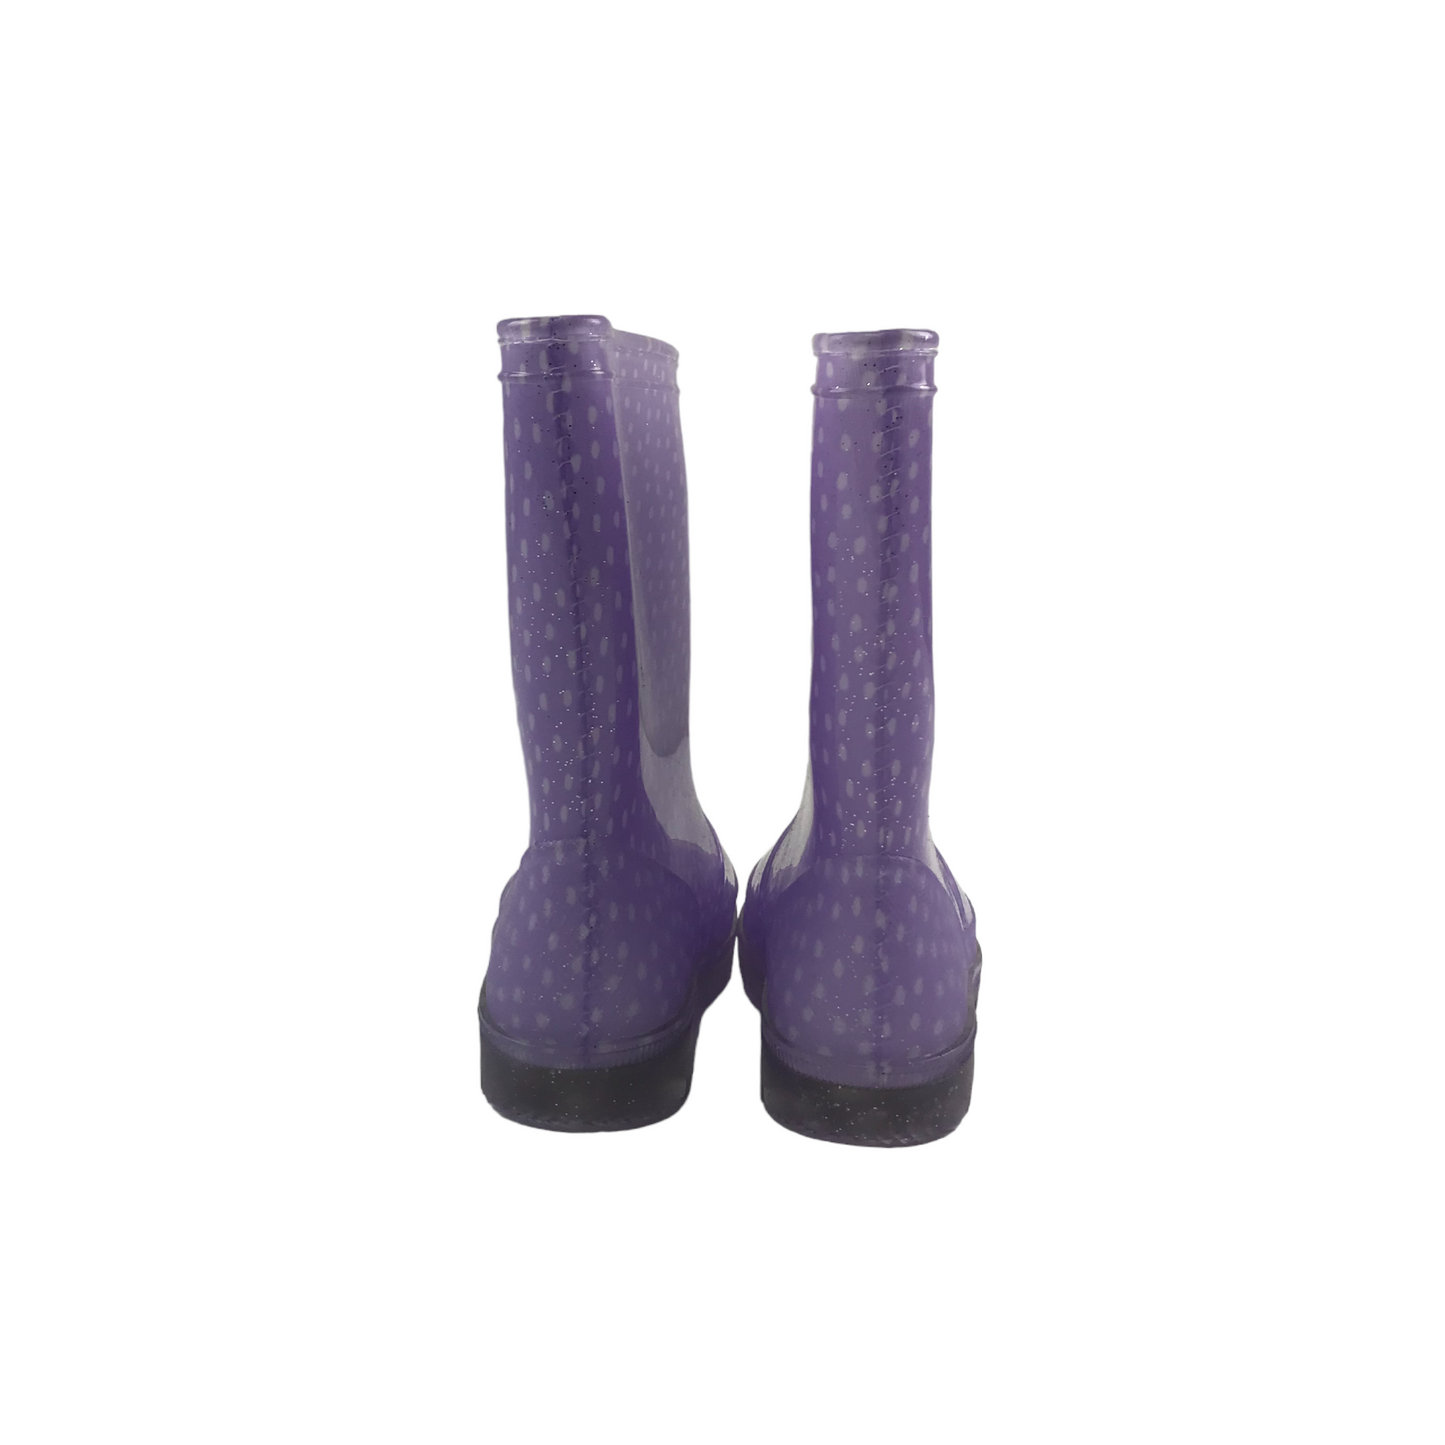 Disney Frozen Wellies Shoe Size 11 junior Purple